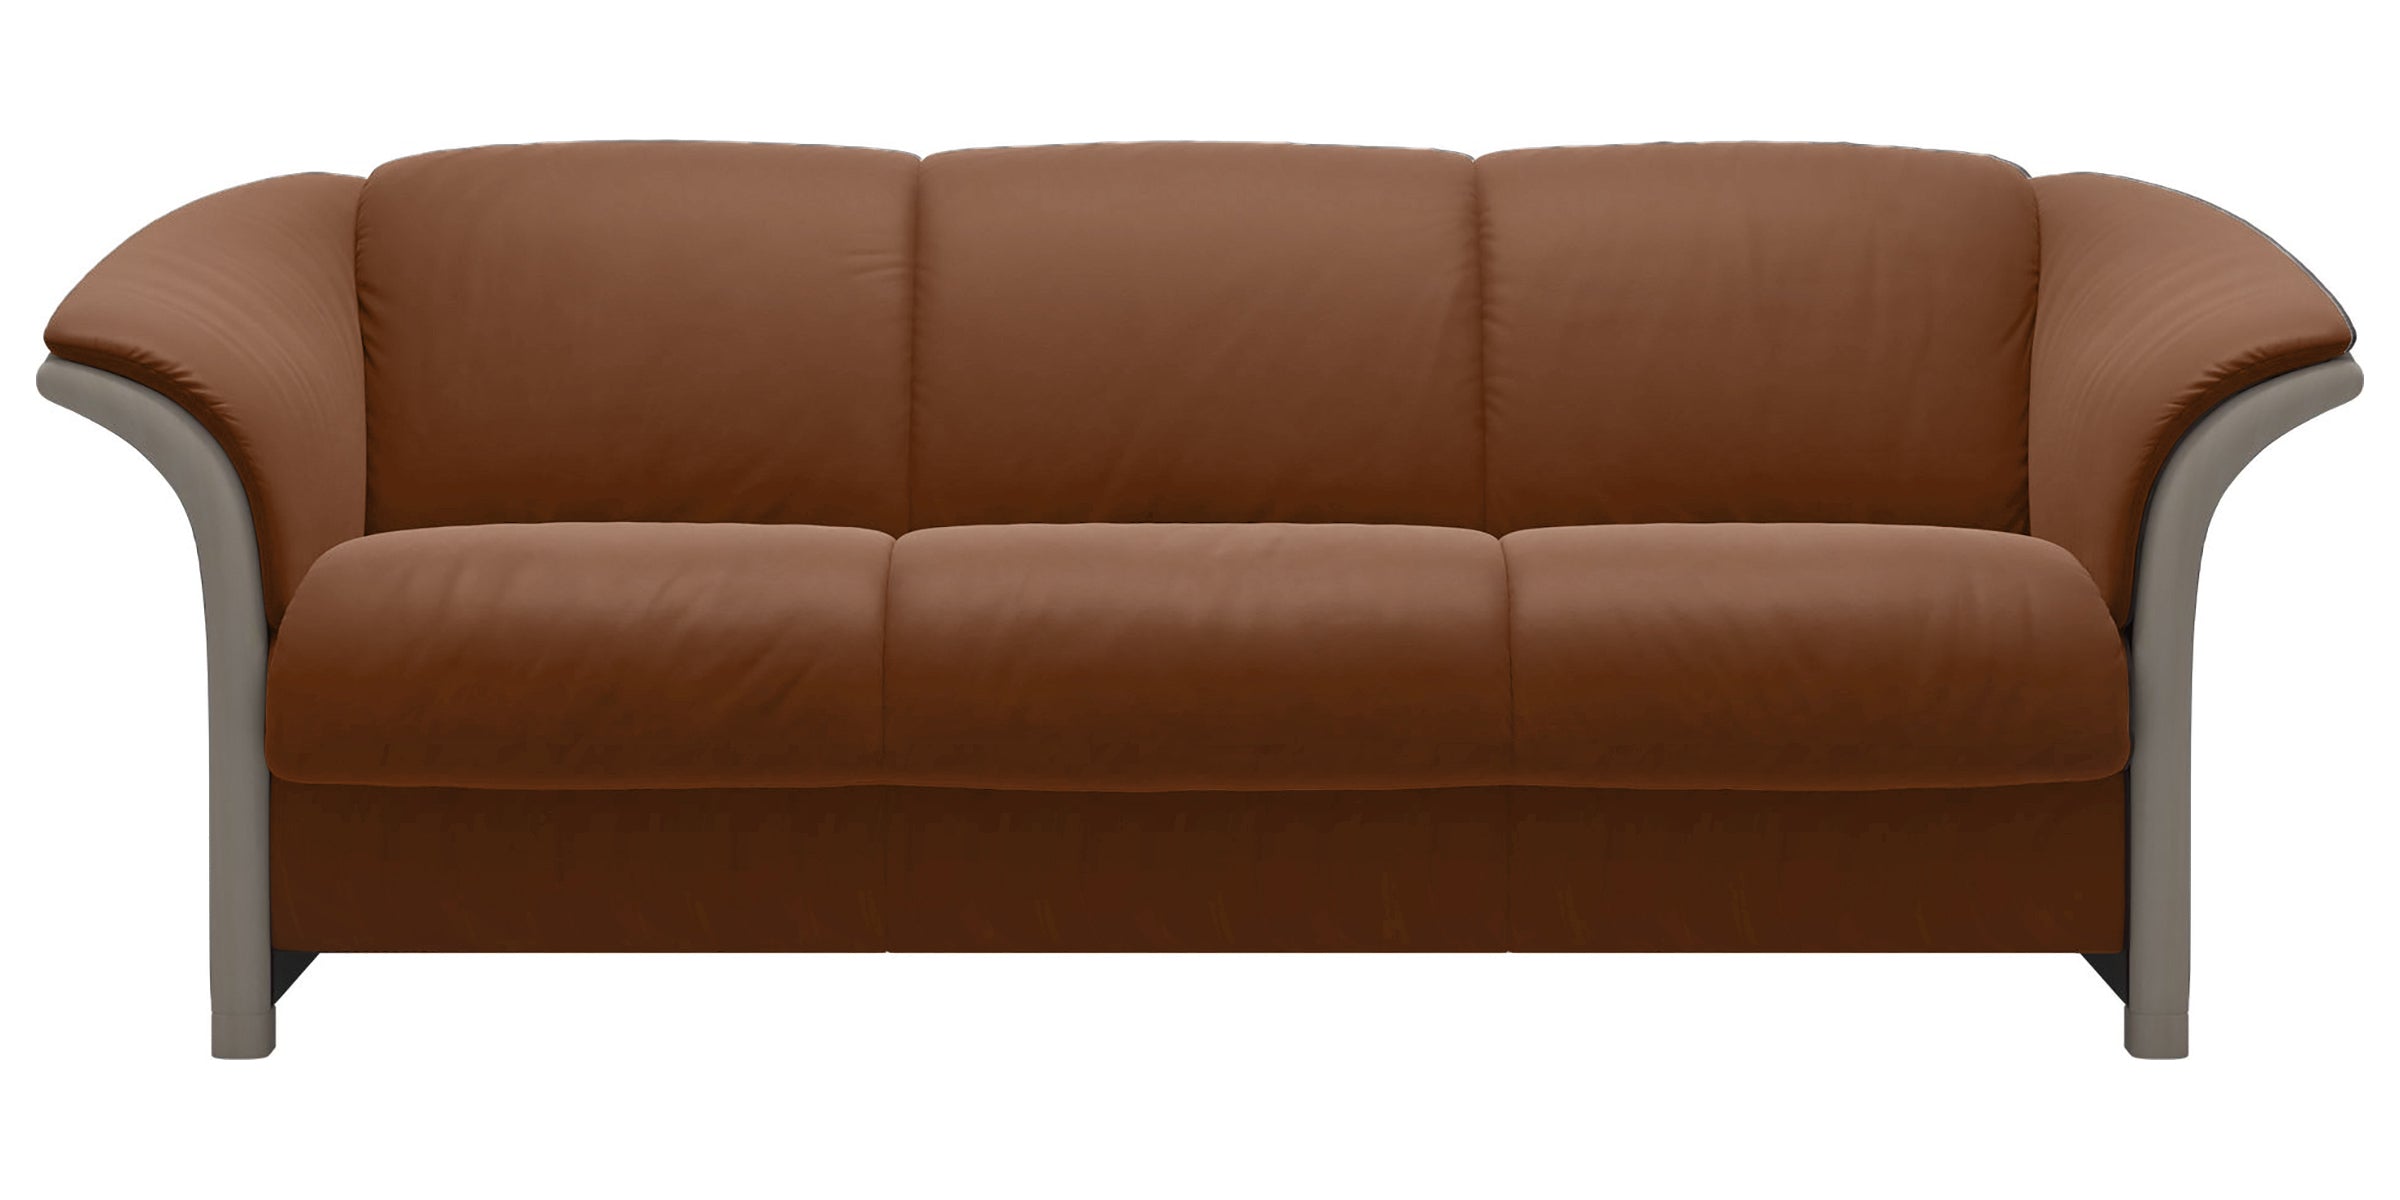 Paloma Leather New Cognac and Whitewash Arm Trim | Stressless Manhattan Sofa | Valley Ridge Furniture